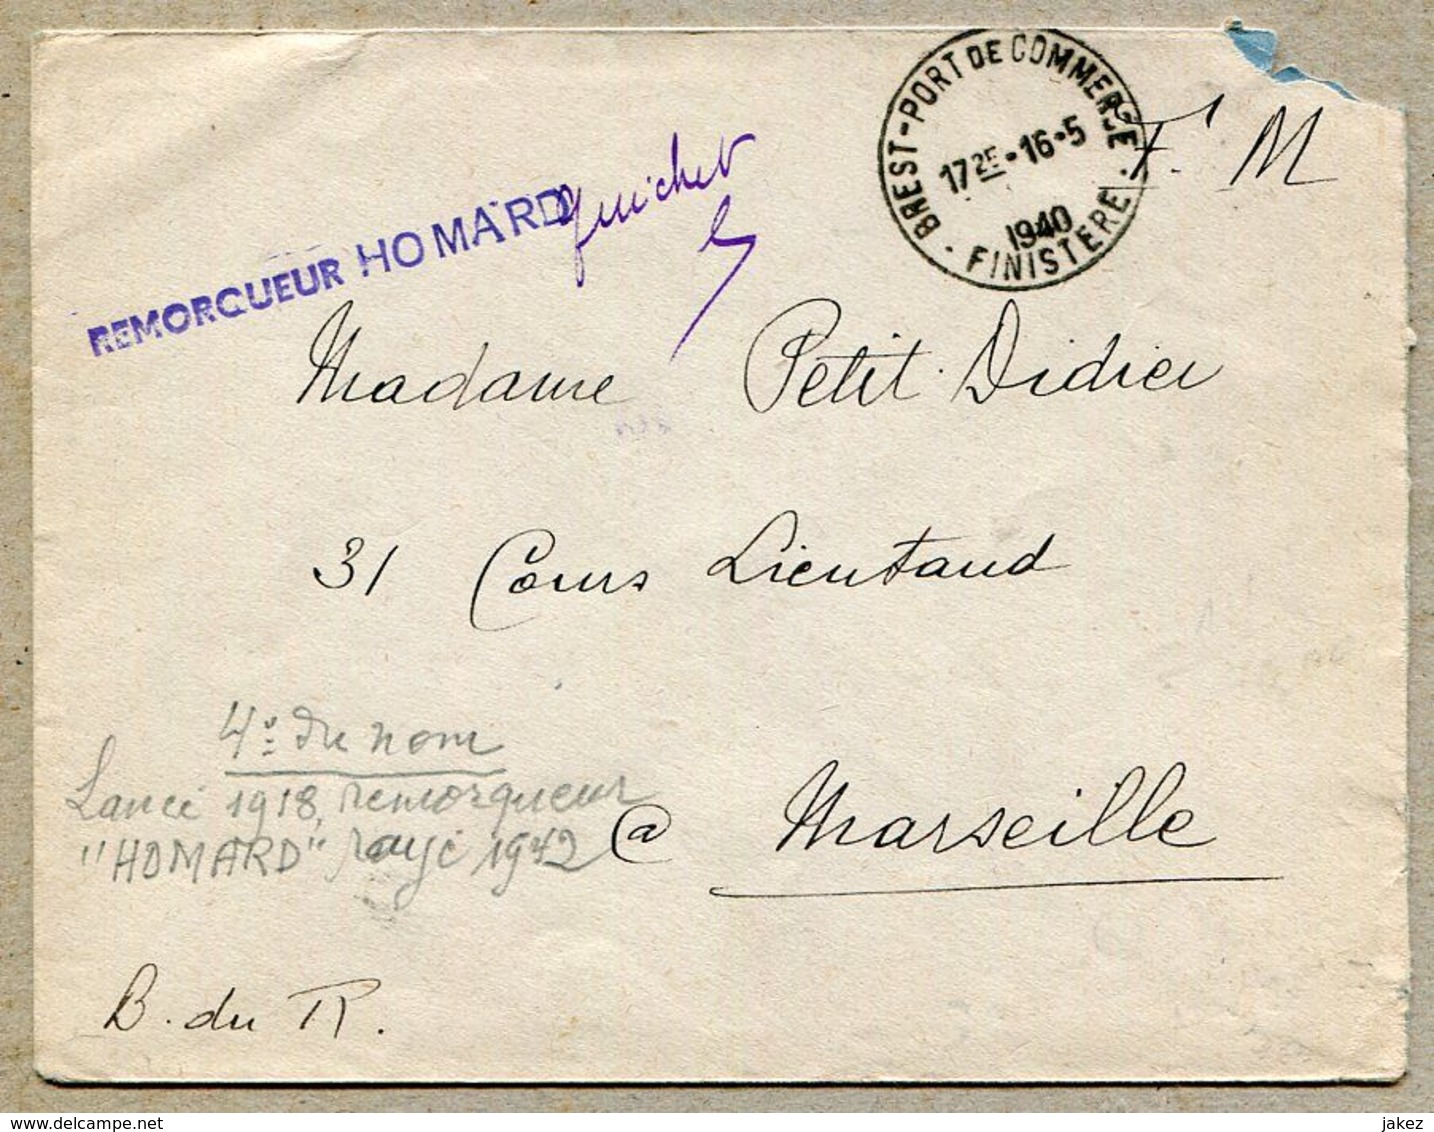 REMORQUEUR "HOMARD" Linéaire + Horoplan  BREST - PORT DE COMMERCE 1940 - Posta Marittima